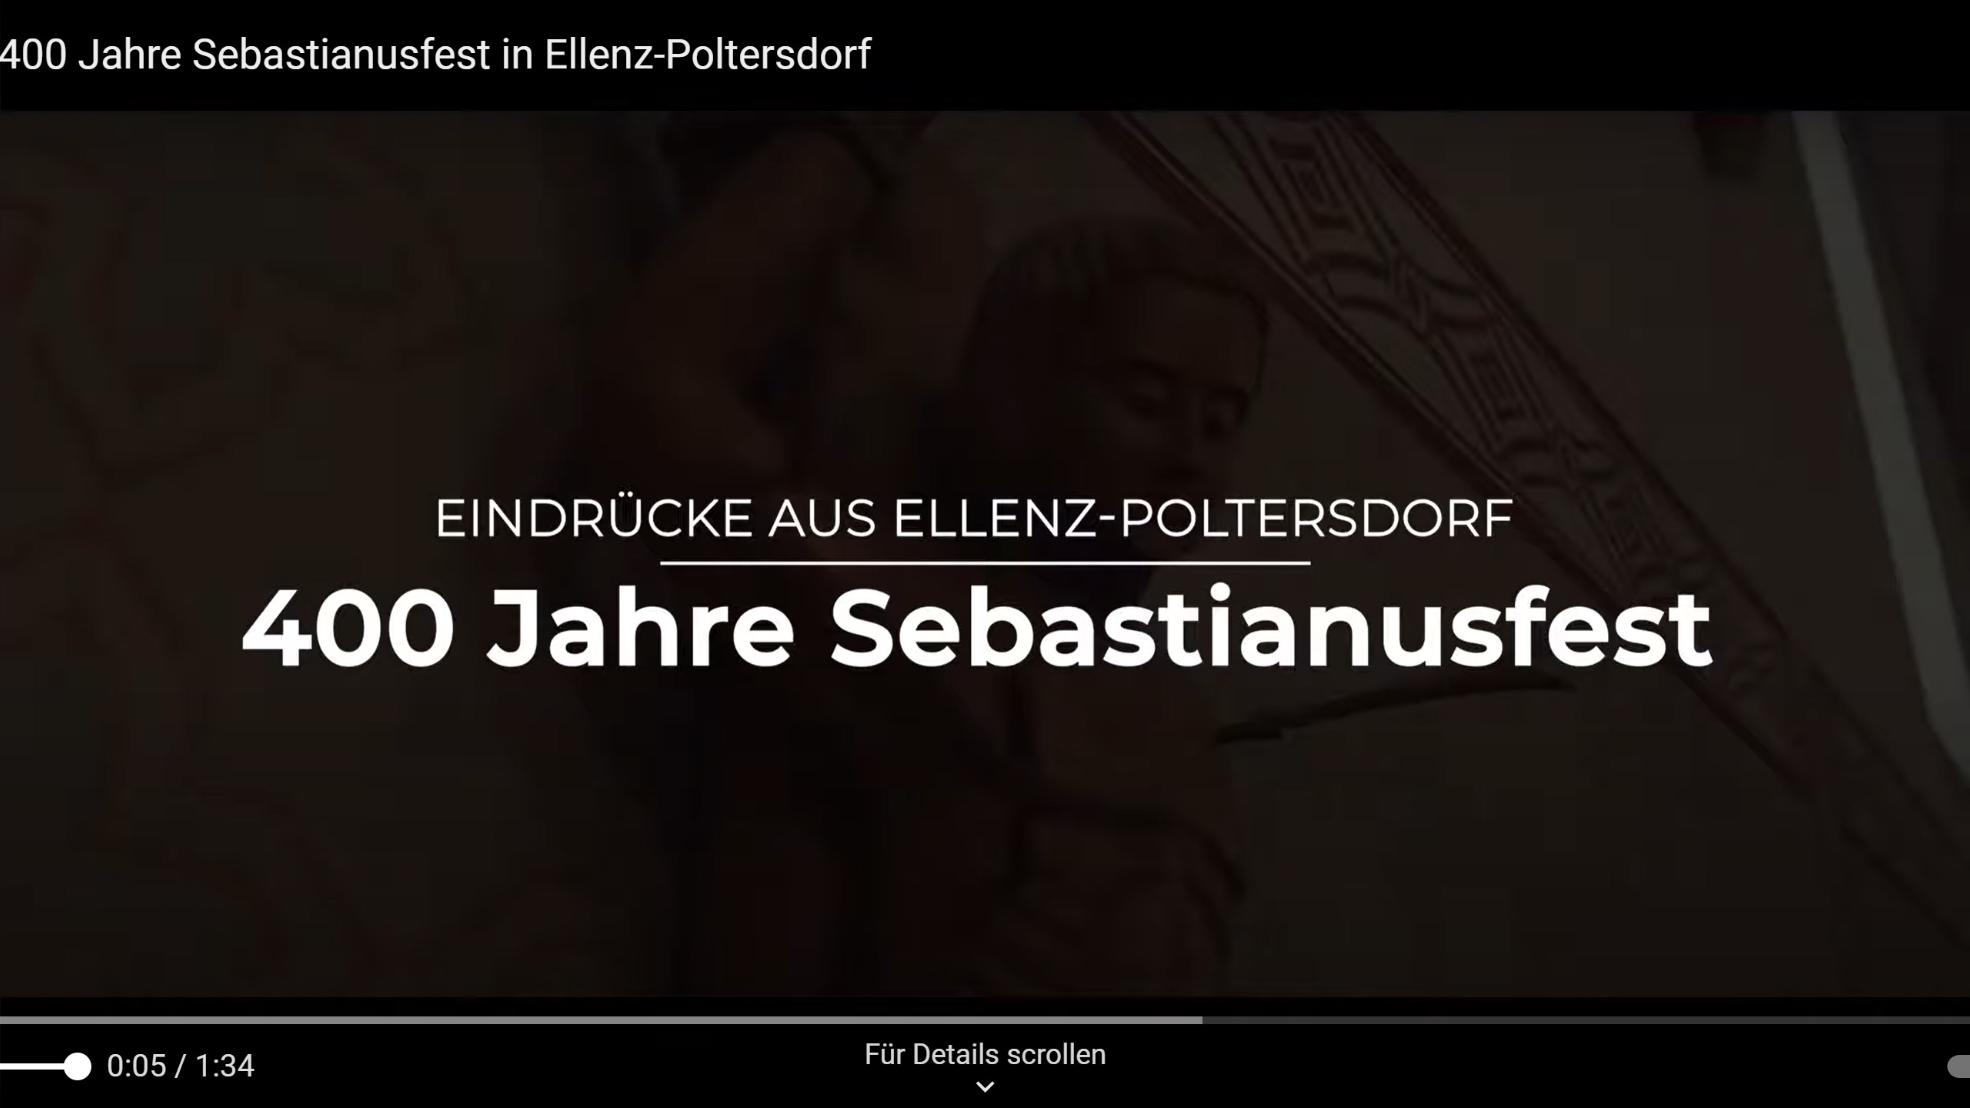 Titelbild Feierlichkeiten Sebastianusfest Ellenz-Poltersdorf